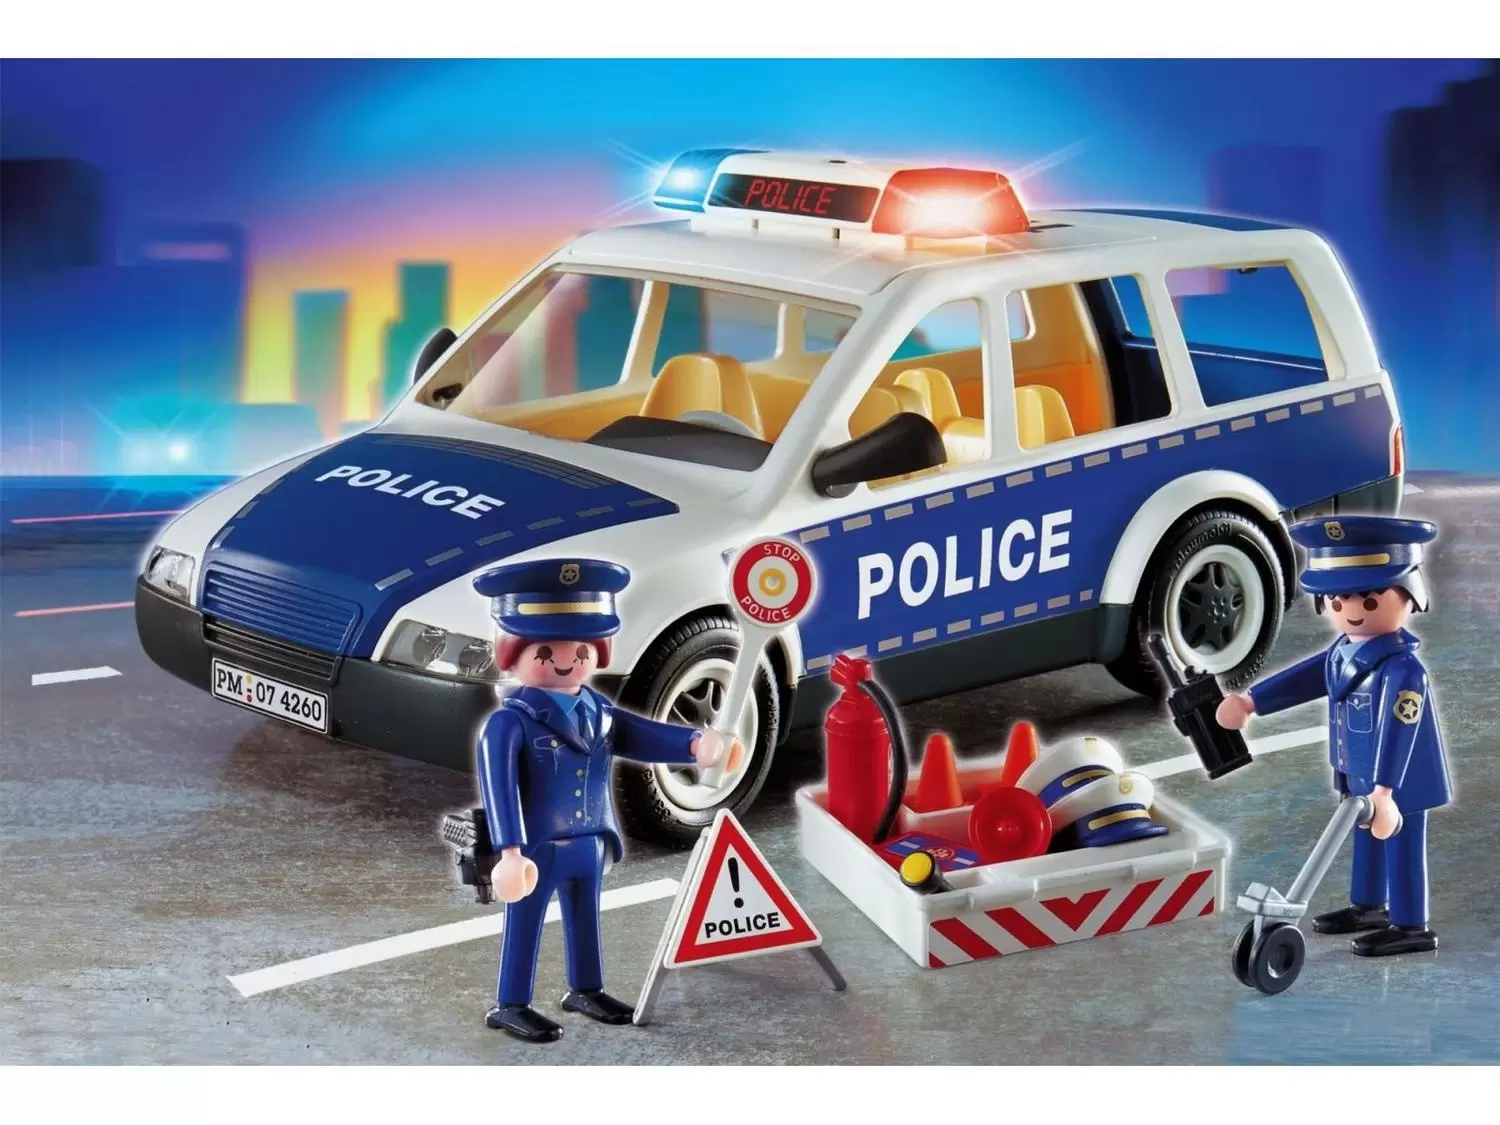 Patrol Car - Police Playmobil 4260